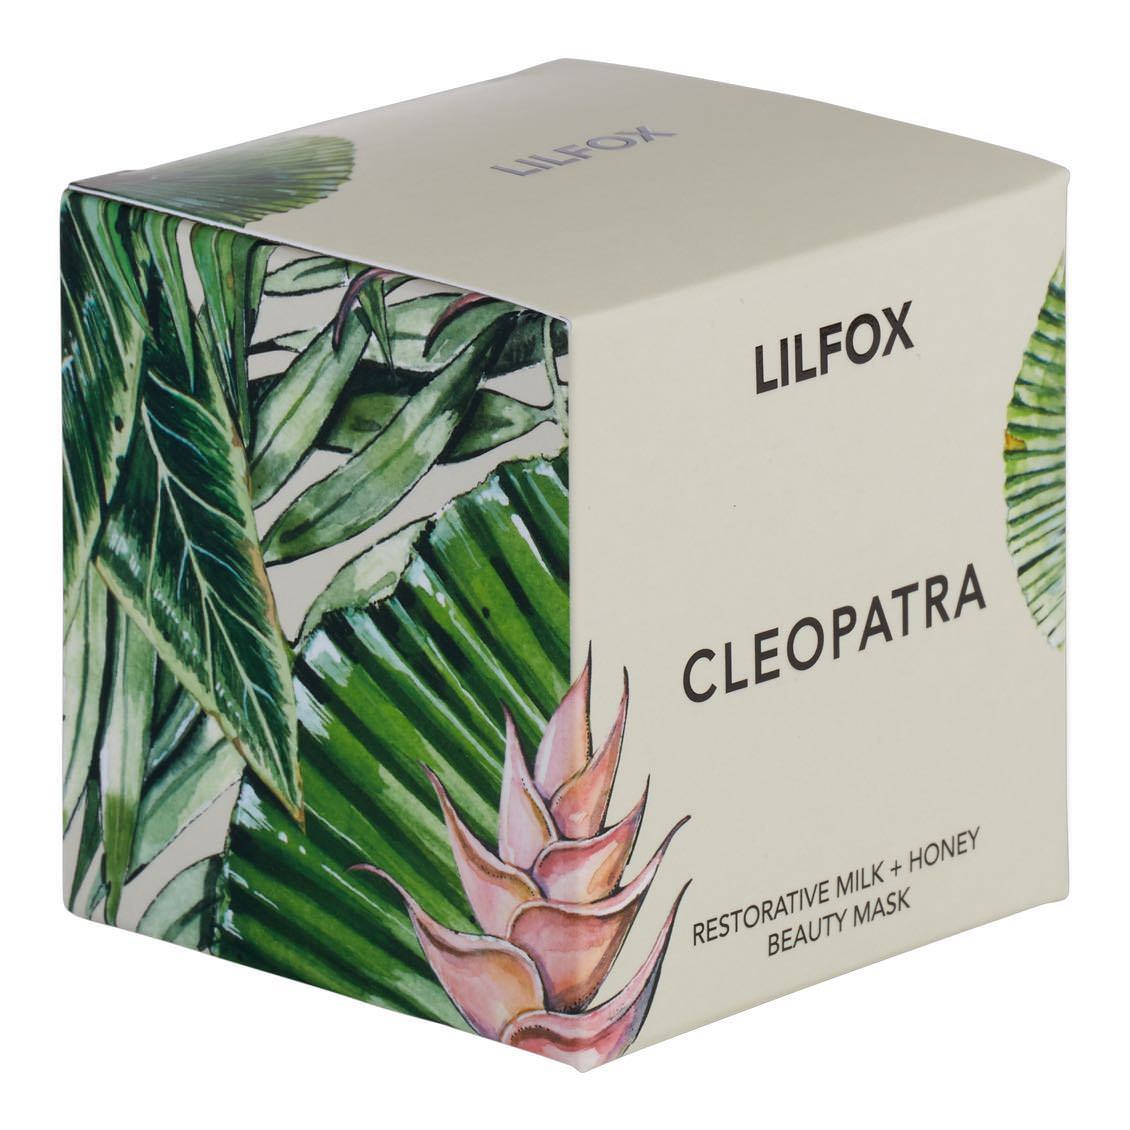 Cleopatra Restorative Milk + Honey Beauty Mask Gesichtsmaske LILFOX - Genuine Selection